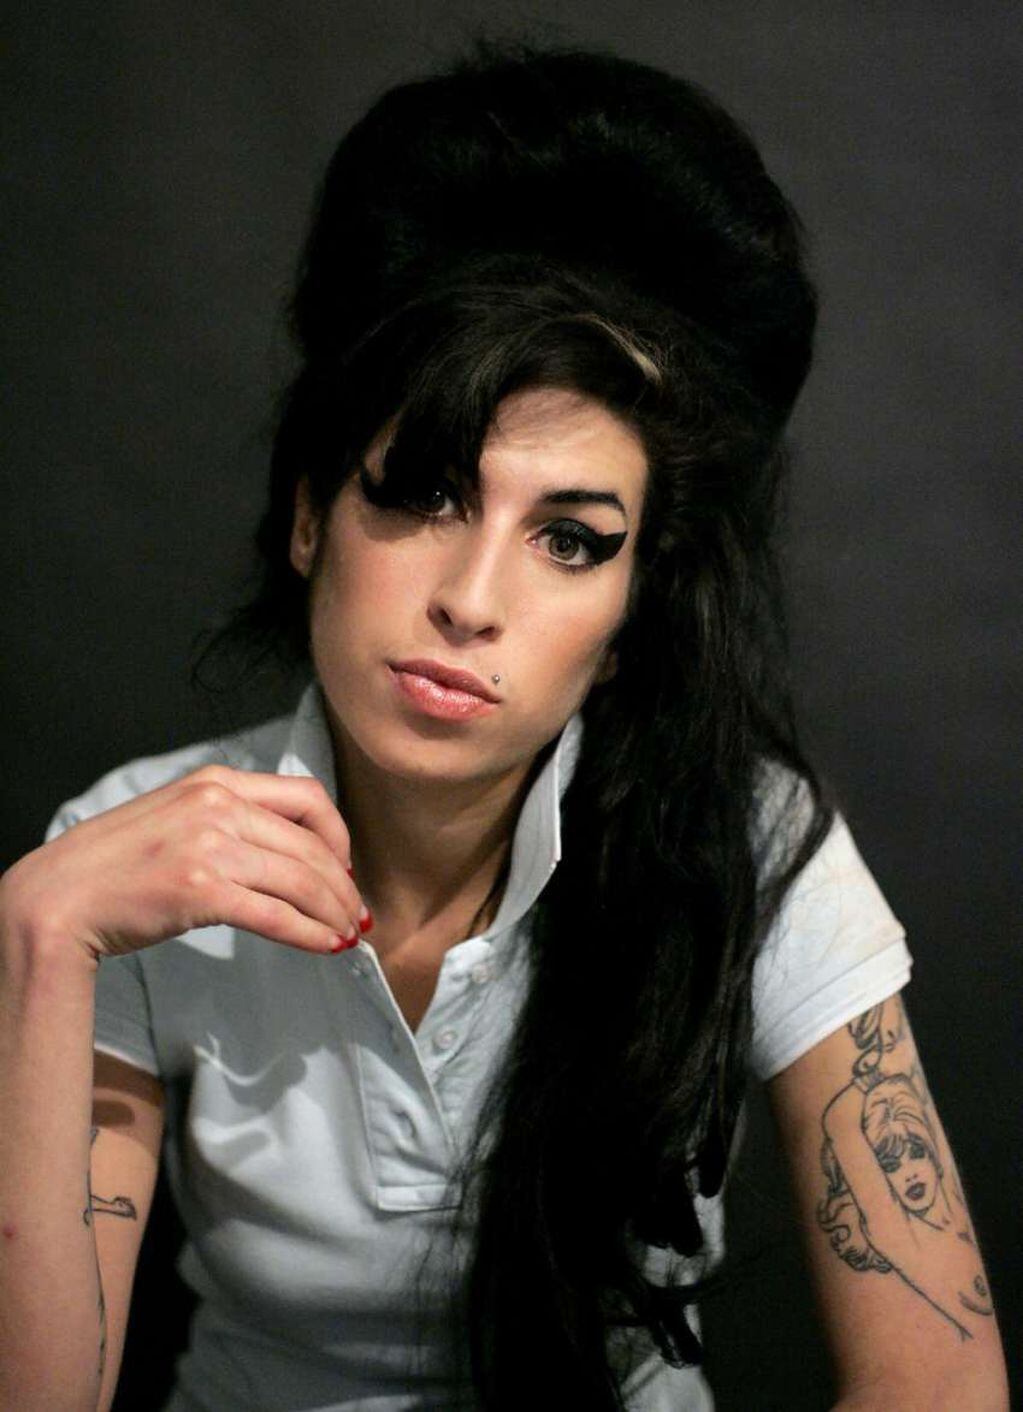 
En el documental de Kapadia se afirma la tesis de la responsabilidad del padre de Winehouse respecto de su muerte.
